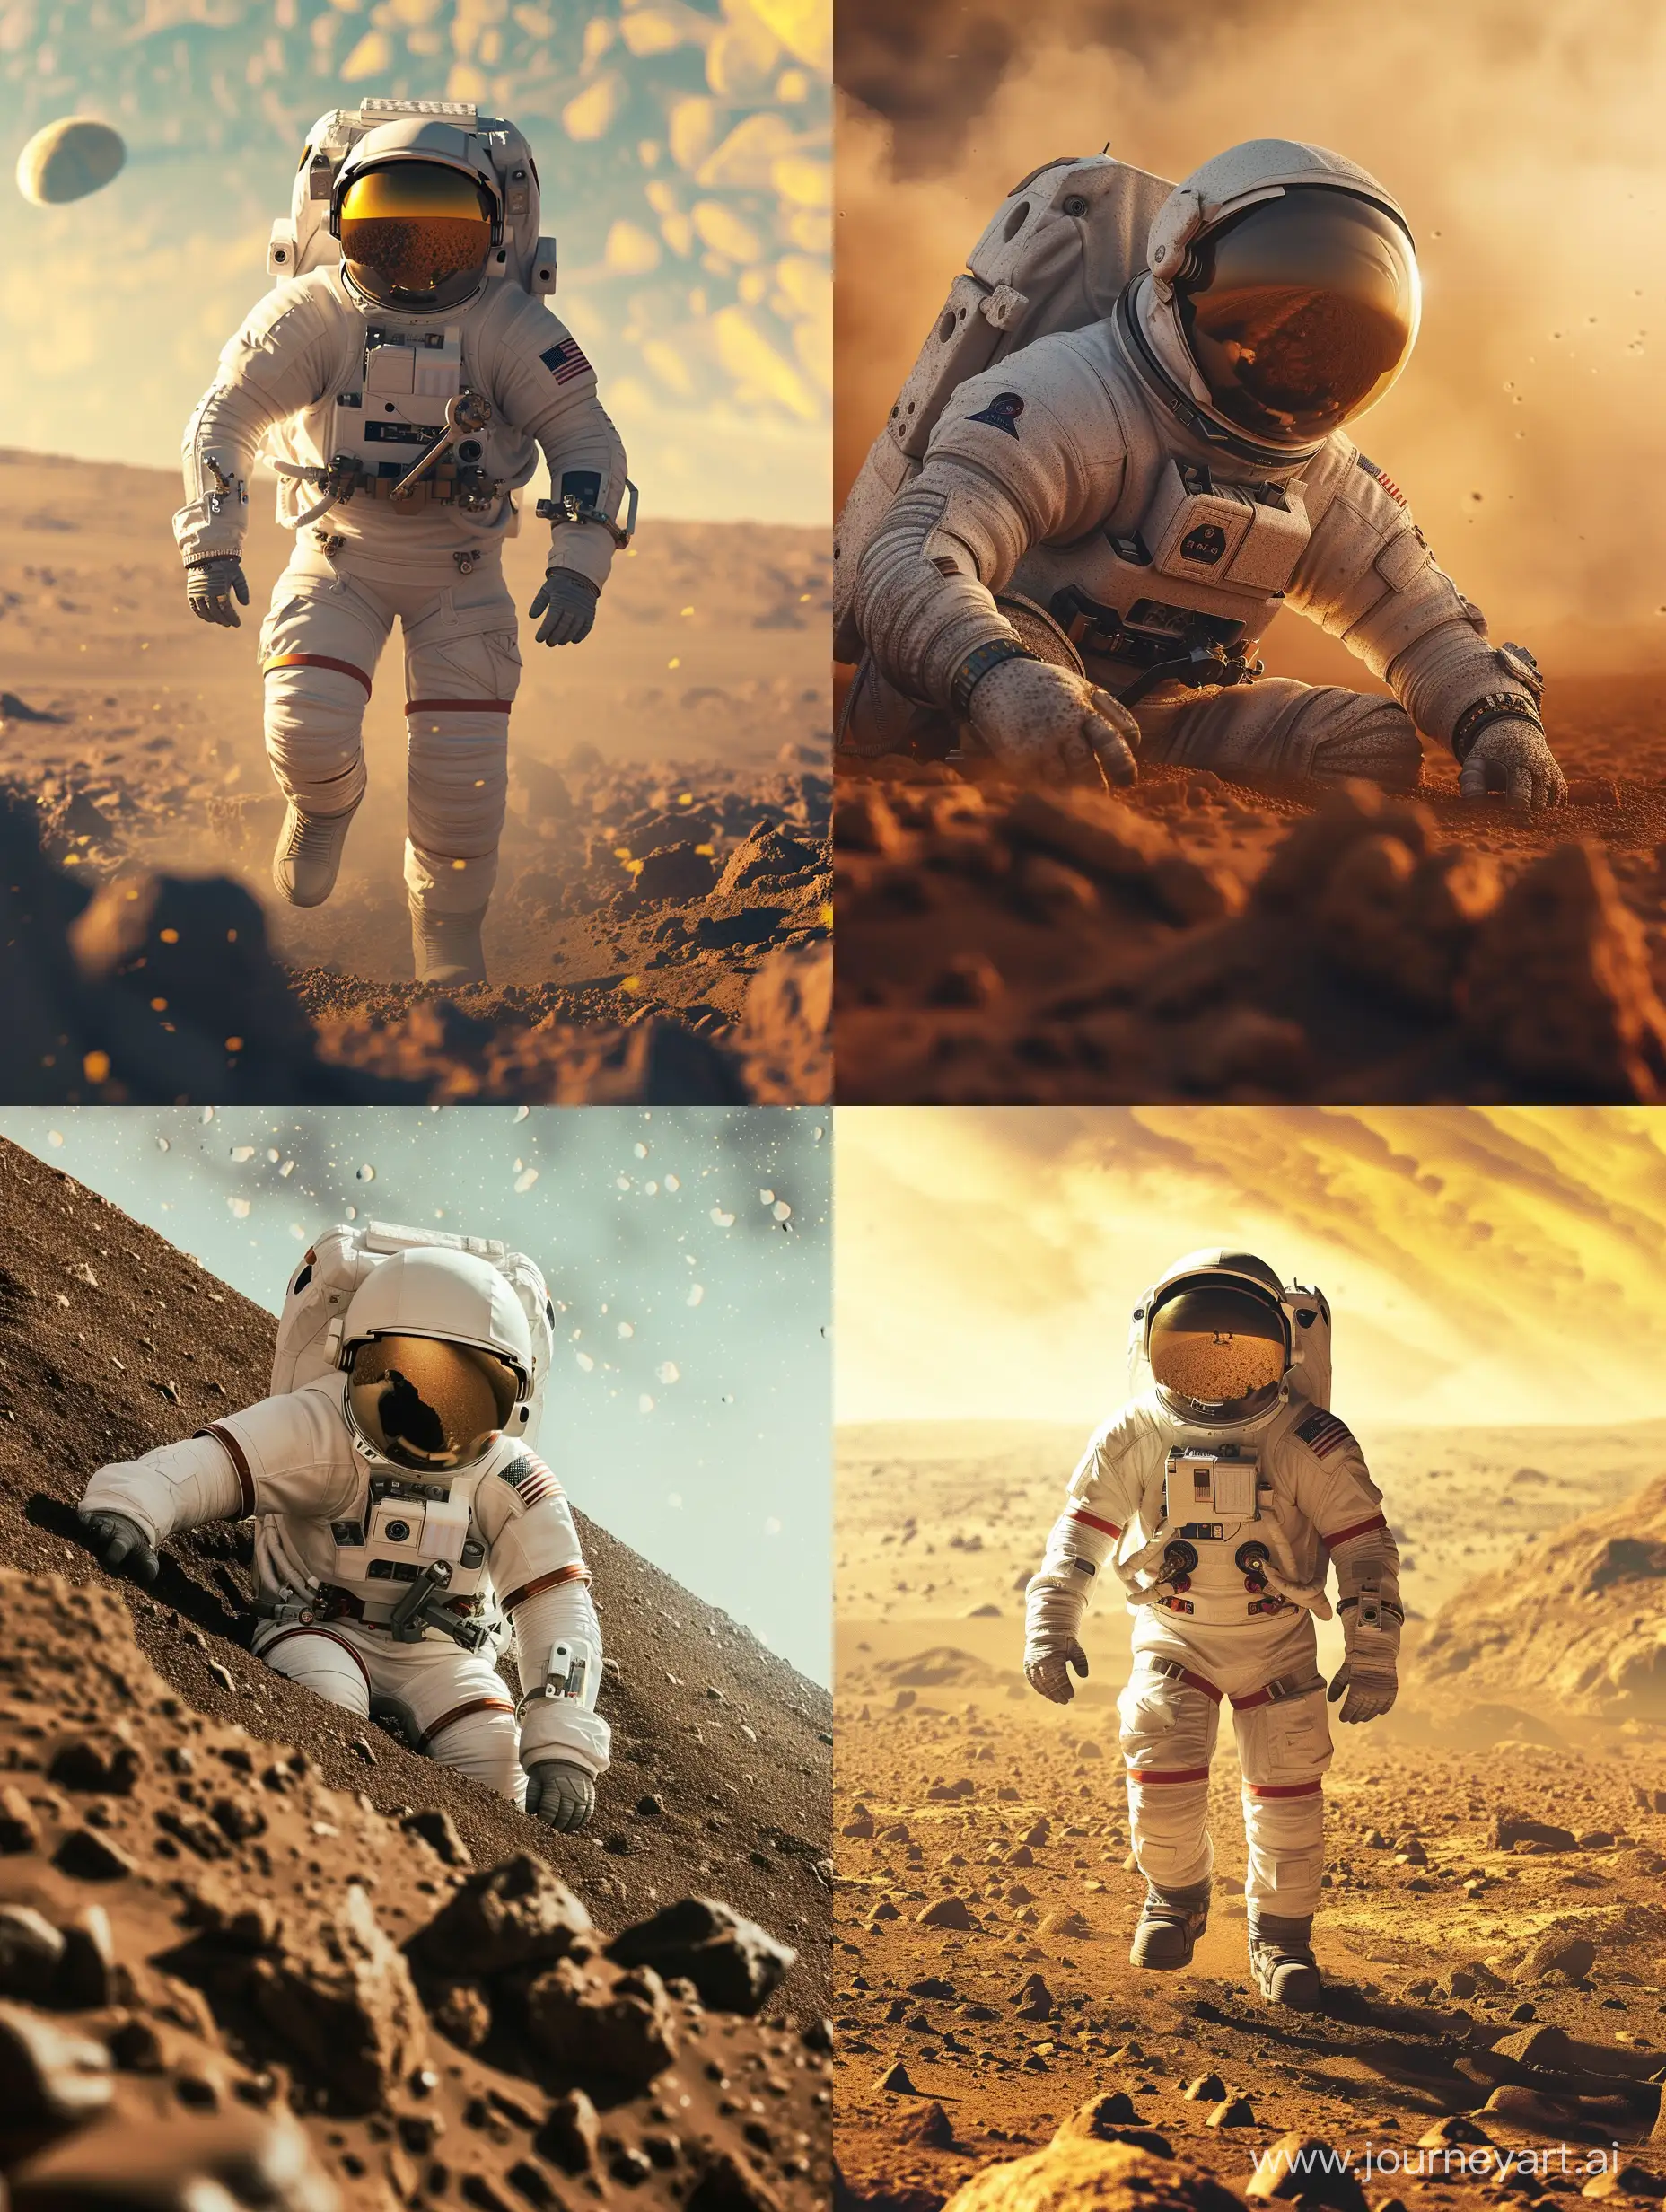 Solitary-Mars-Pioneer-Astronauts-Water-Extraction-Endeavor